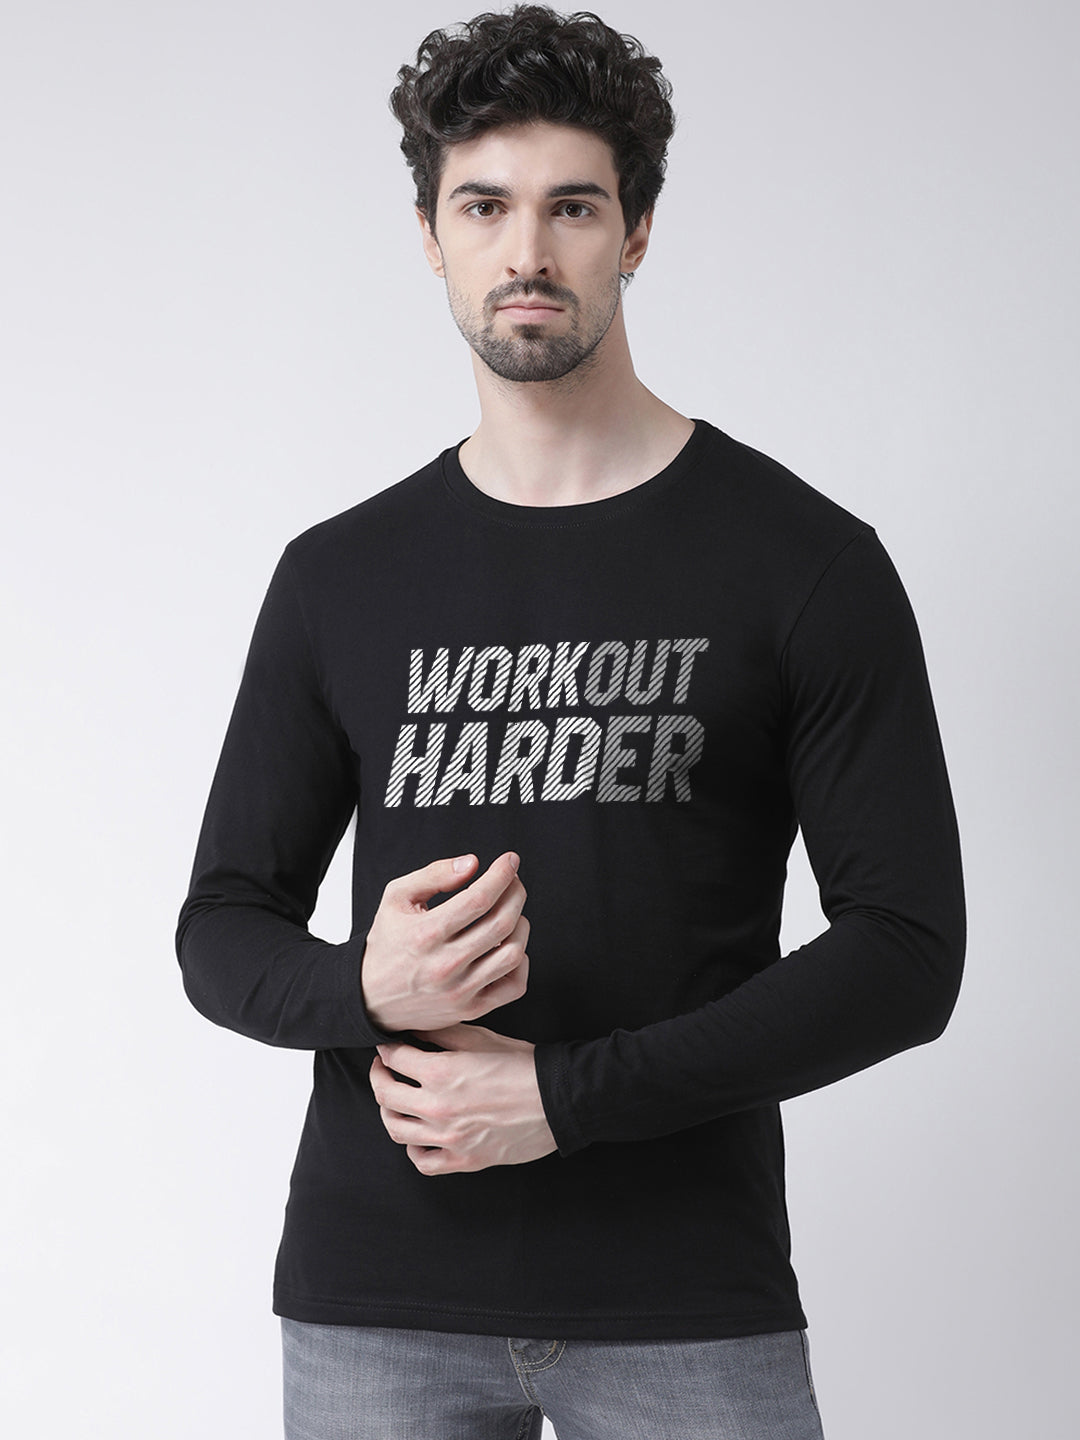 Men Workout Harder Printed Full Sleeve T-Shirt - Friskers